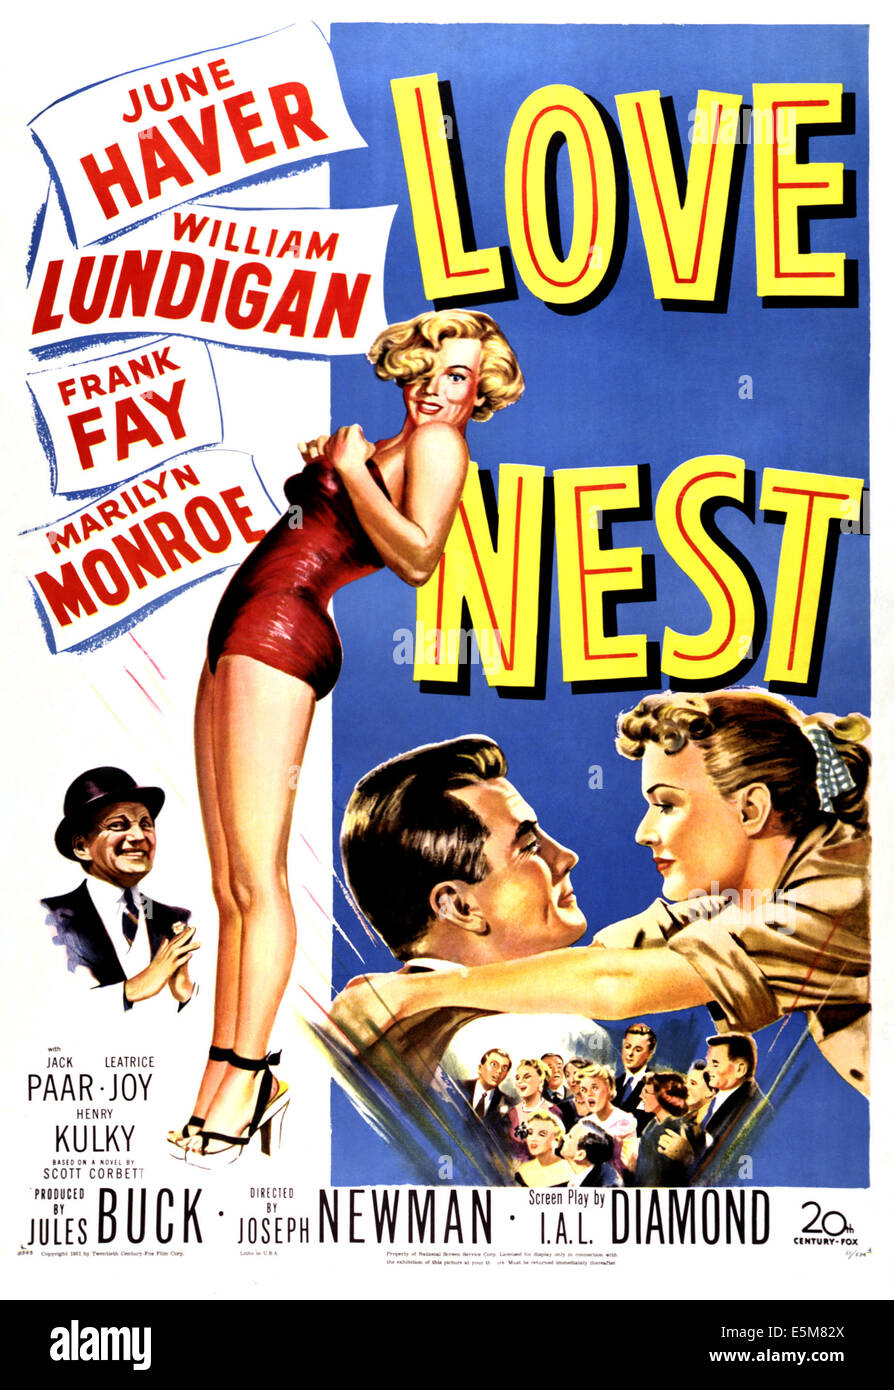 LOVE NEST, (poster art), Frank Fay, Marilyn Monroe, William Lundigan, June Haver, 1951, TM and Copyright © 20th Century Fox Stock Photo